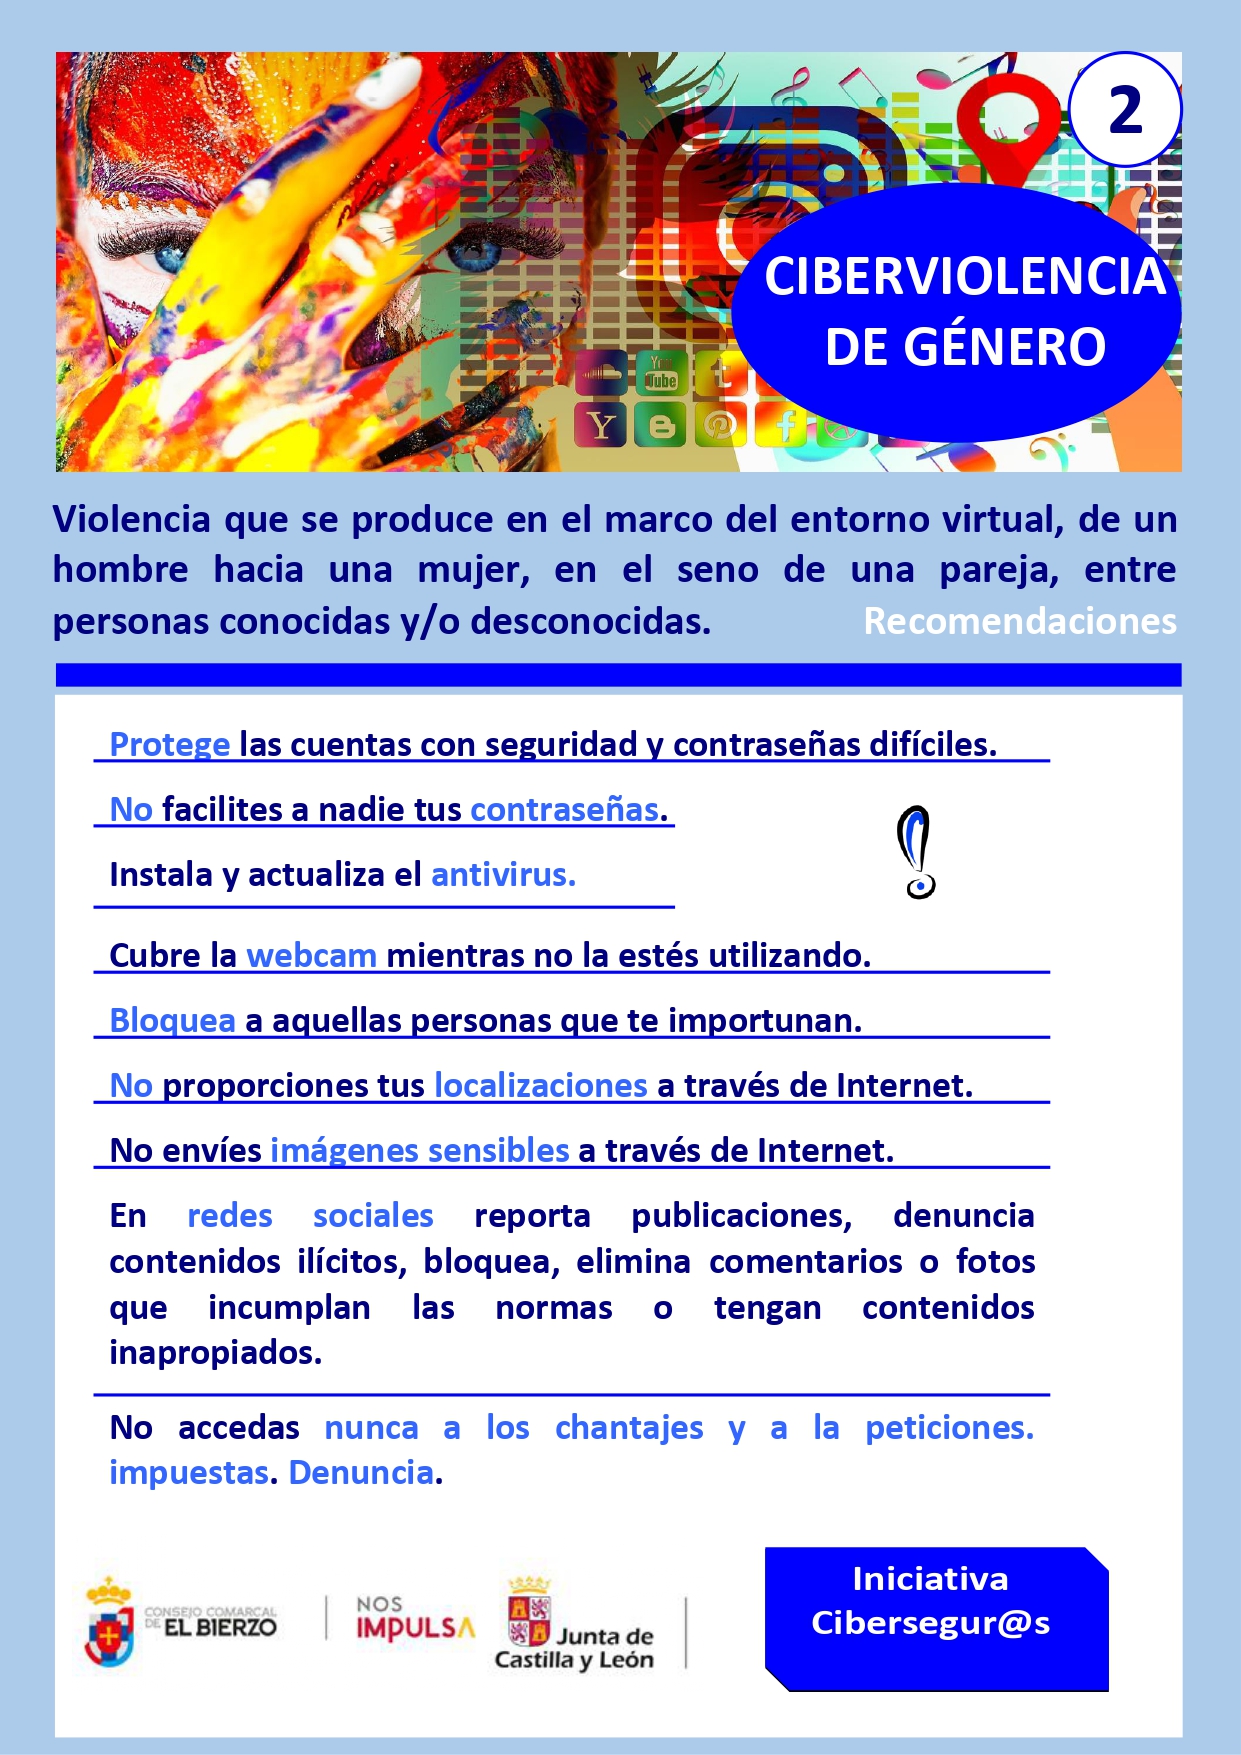 Ciberviolencia: recomendaciones